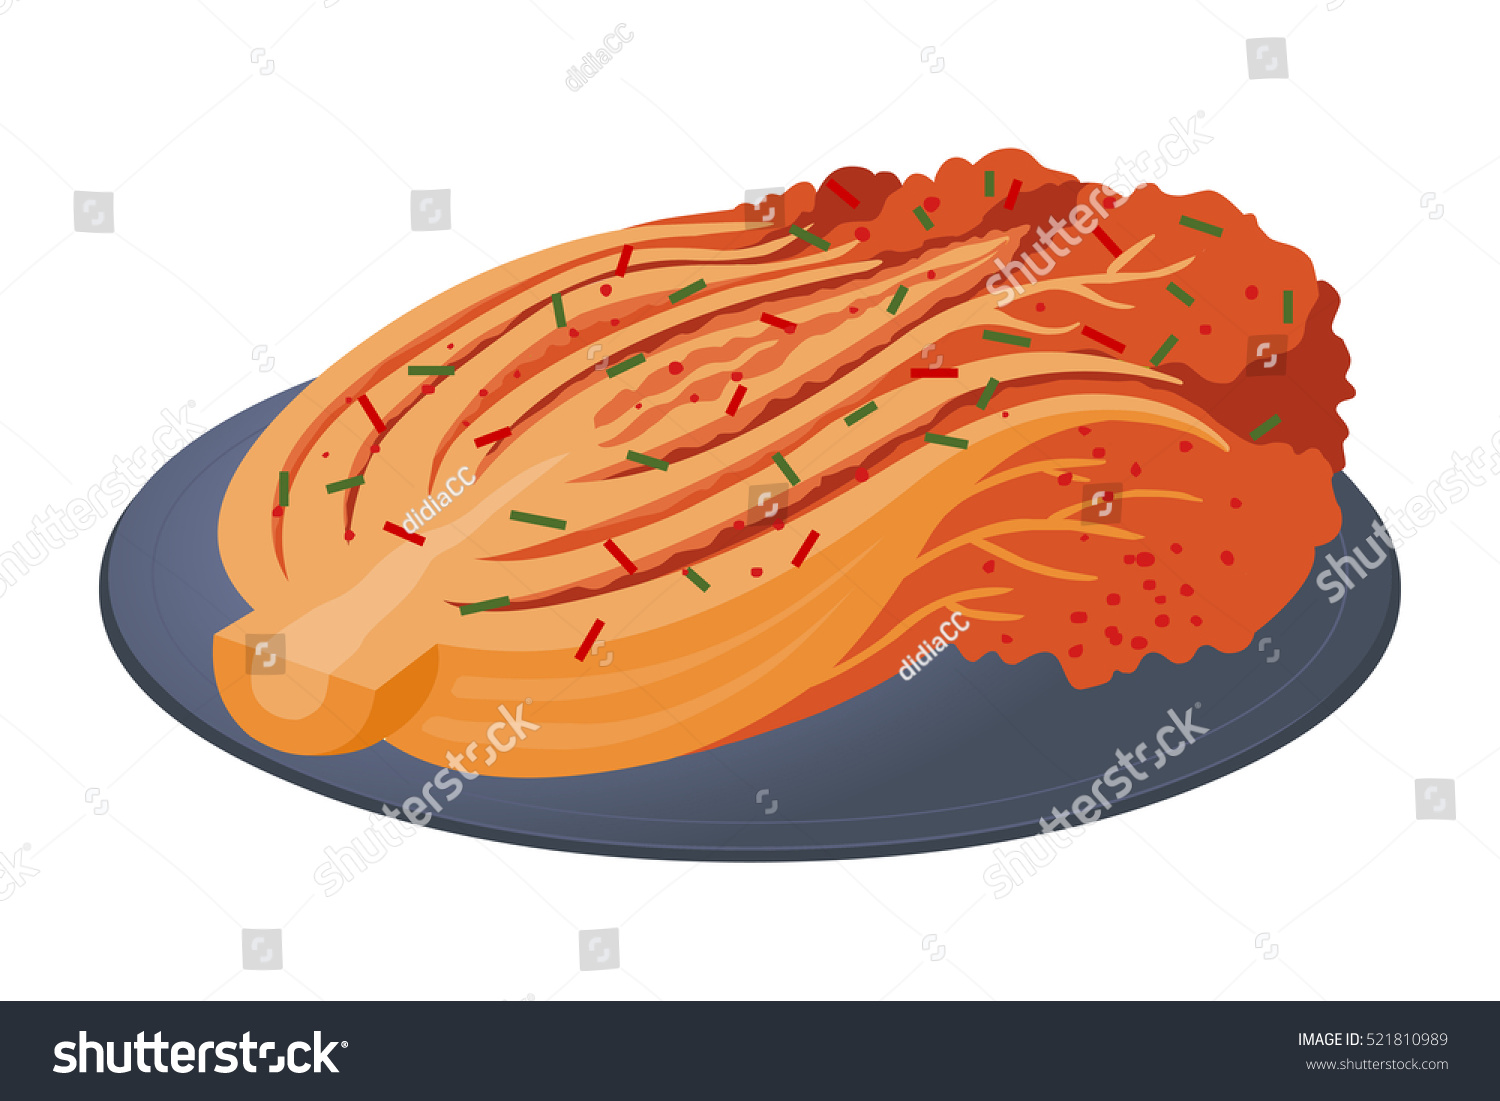 Kimchi Of Korea Stock Vector Illustration 521810989 : Shutterstock